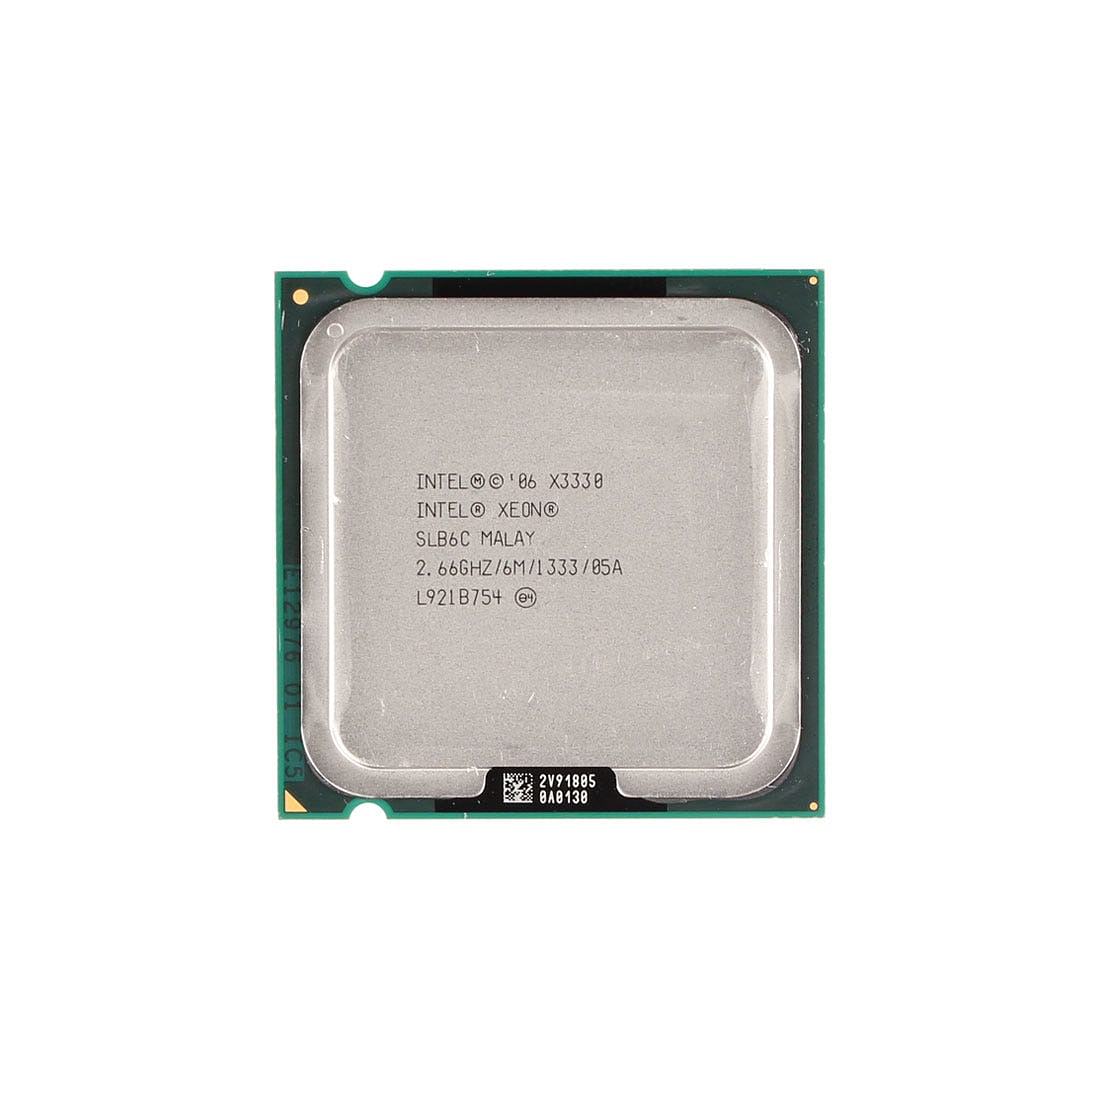 

Intel Xeon Processor X3320